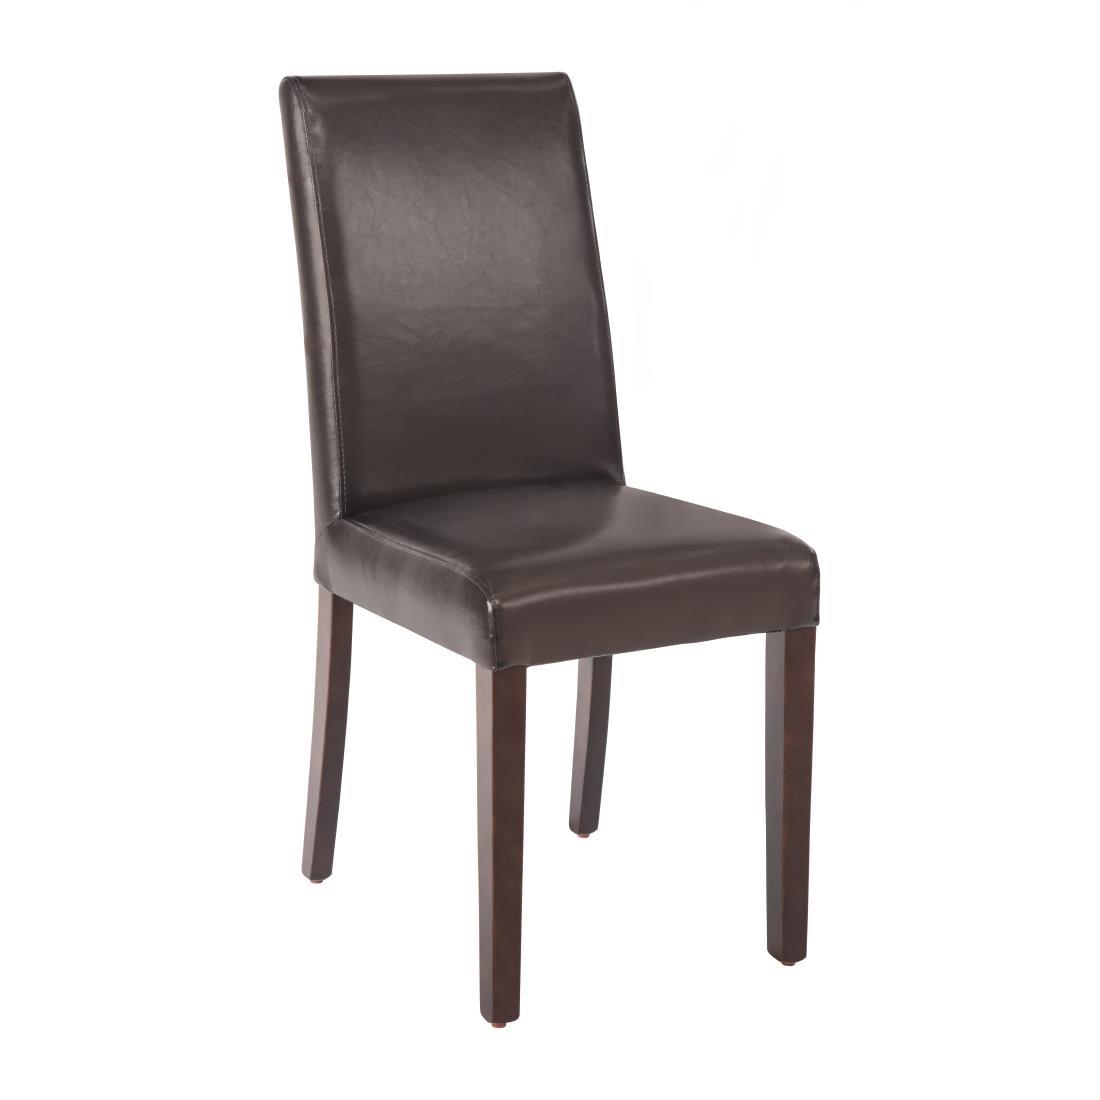 Bolero Faux Leather Dining Chair Dark Brown (Box 2) - GF955  - 1